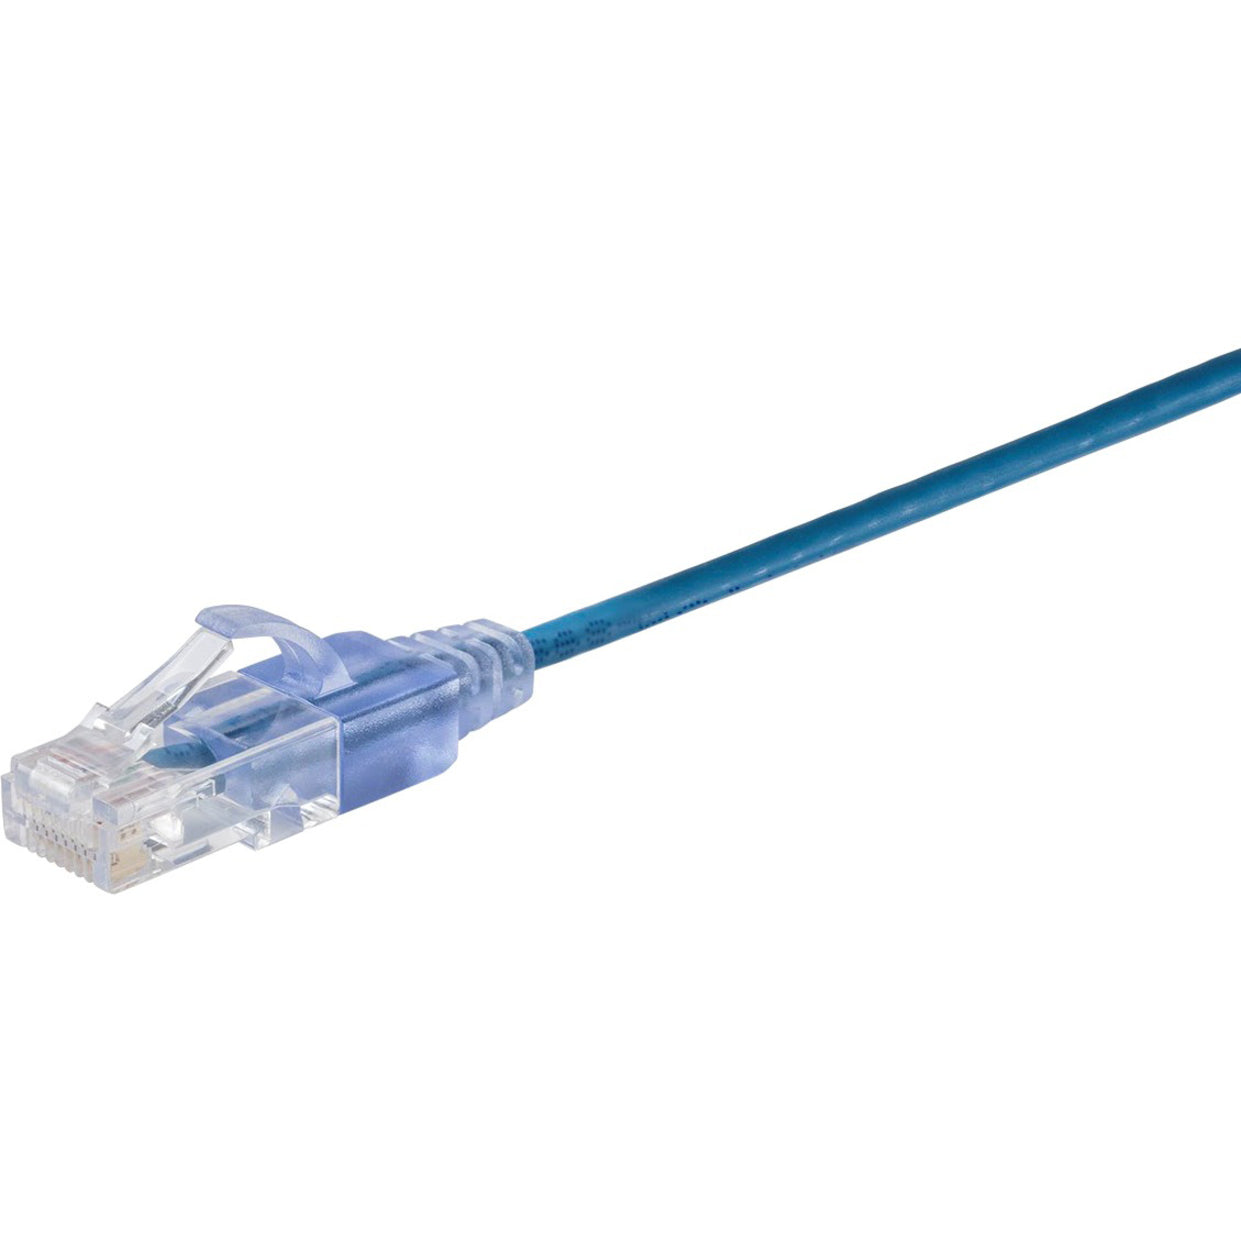 Monoprice 15158 SlimRun Cat6A Ethernet Network Patch Cable 5ft Blue 10-Pack Monoprice 15158 SlimRun Cat6A Ethernet Network Patch Cable 5ft Blue 10-Pack